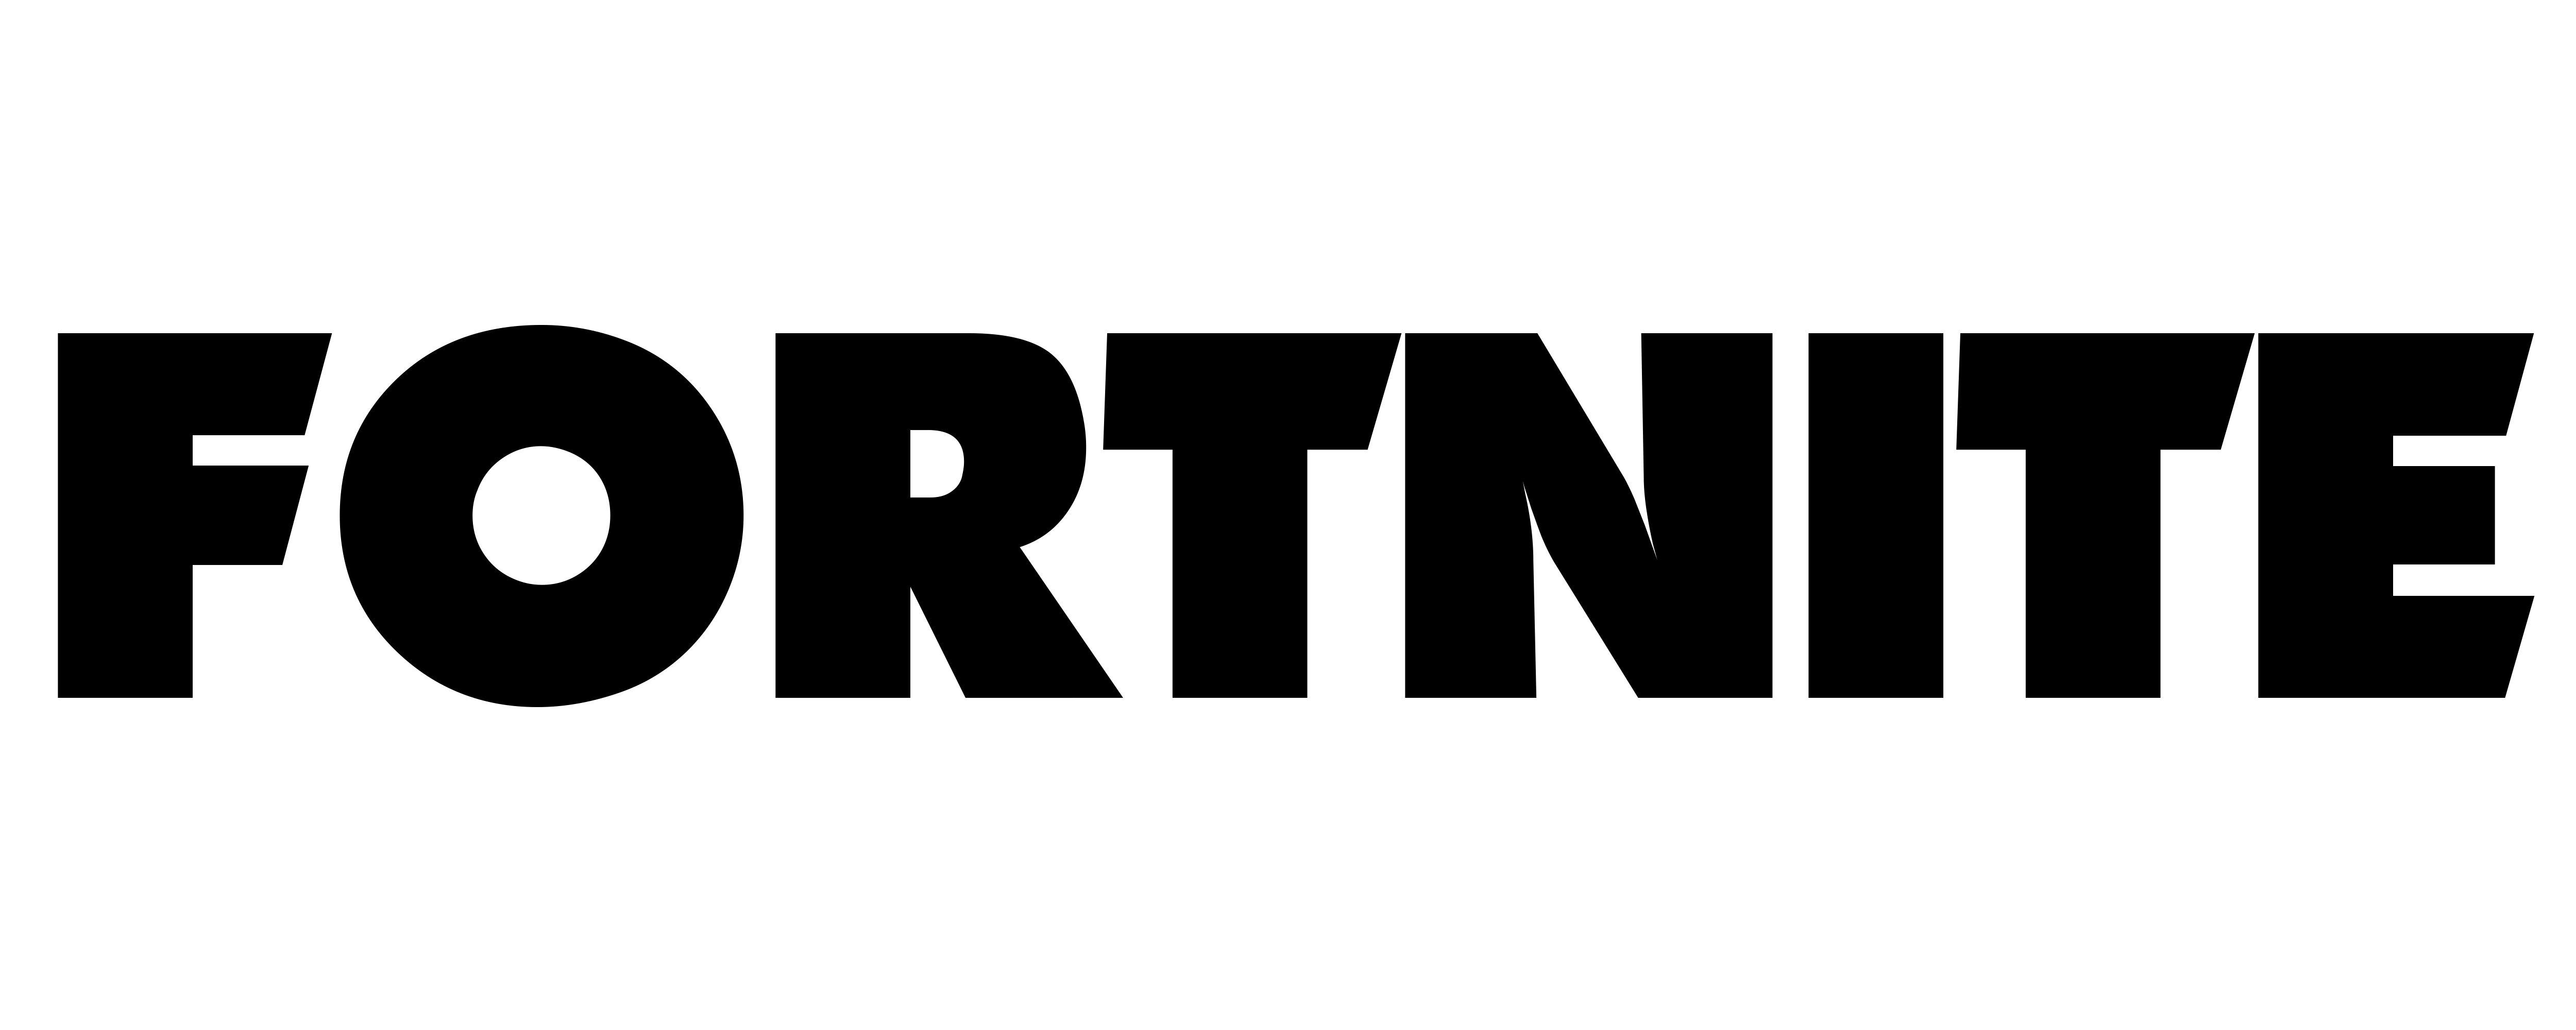 Victoire Fortnite Royale logo PNG Photo